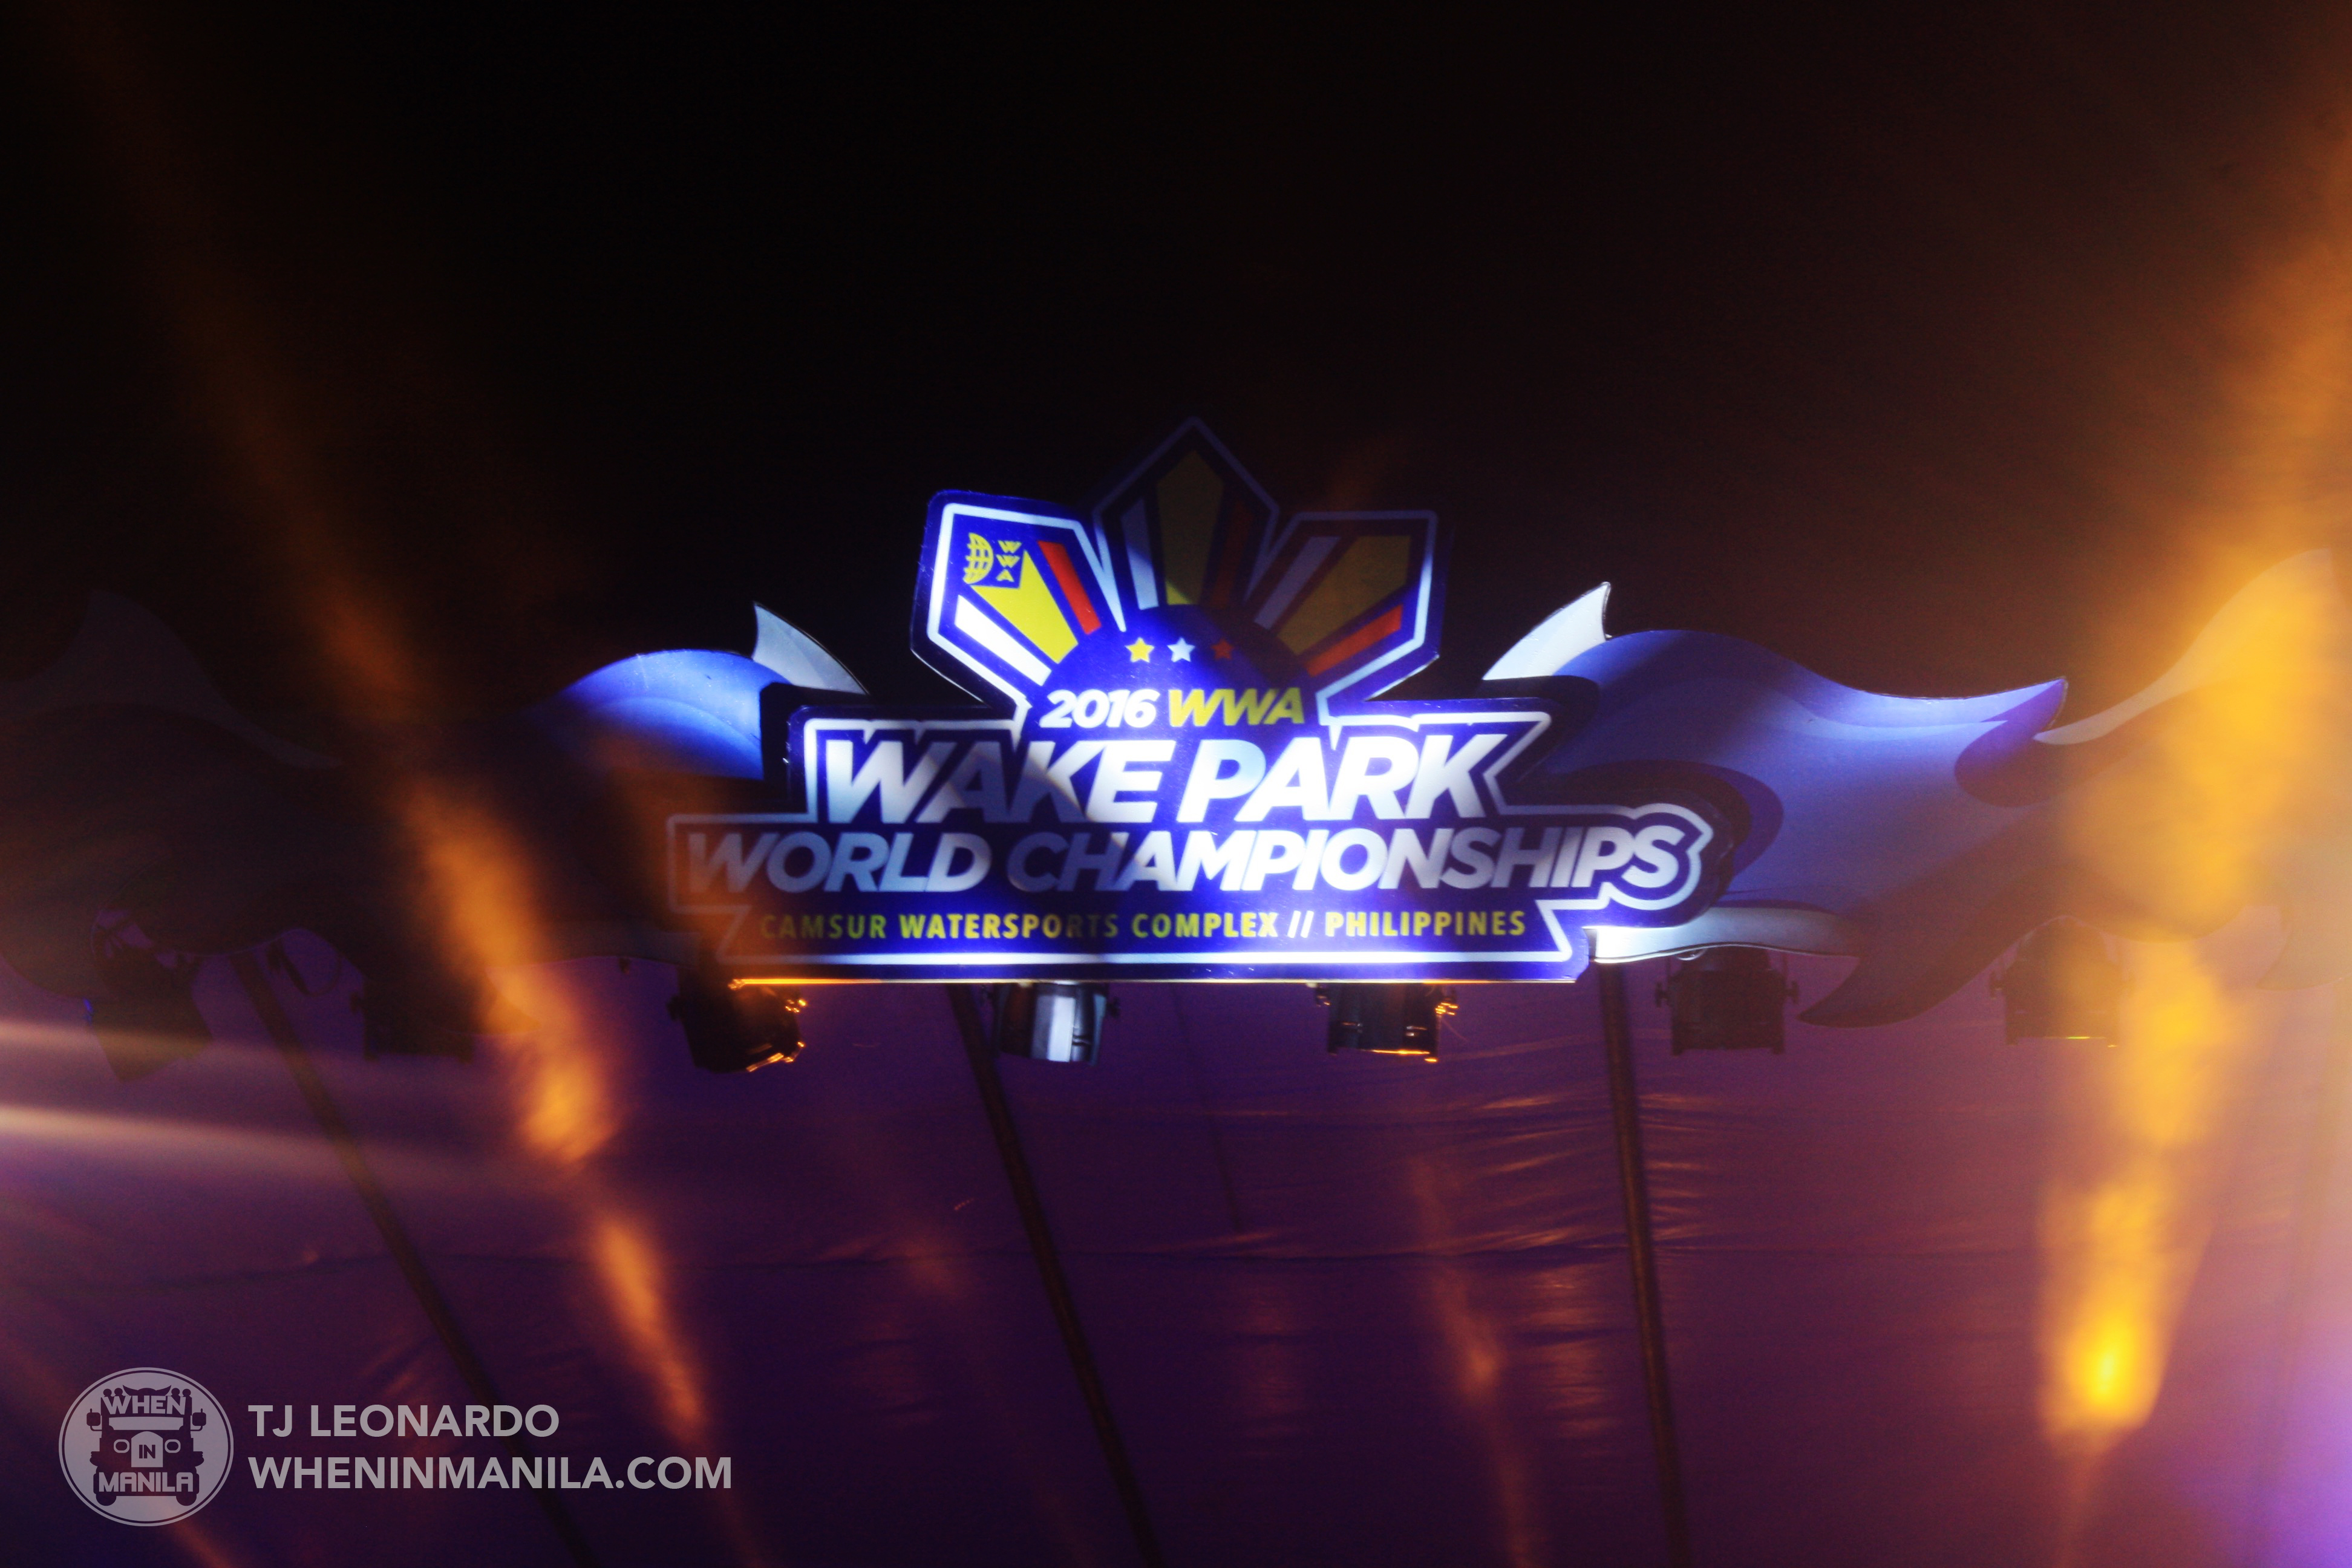 Wake Park World Championships Logo